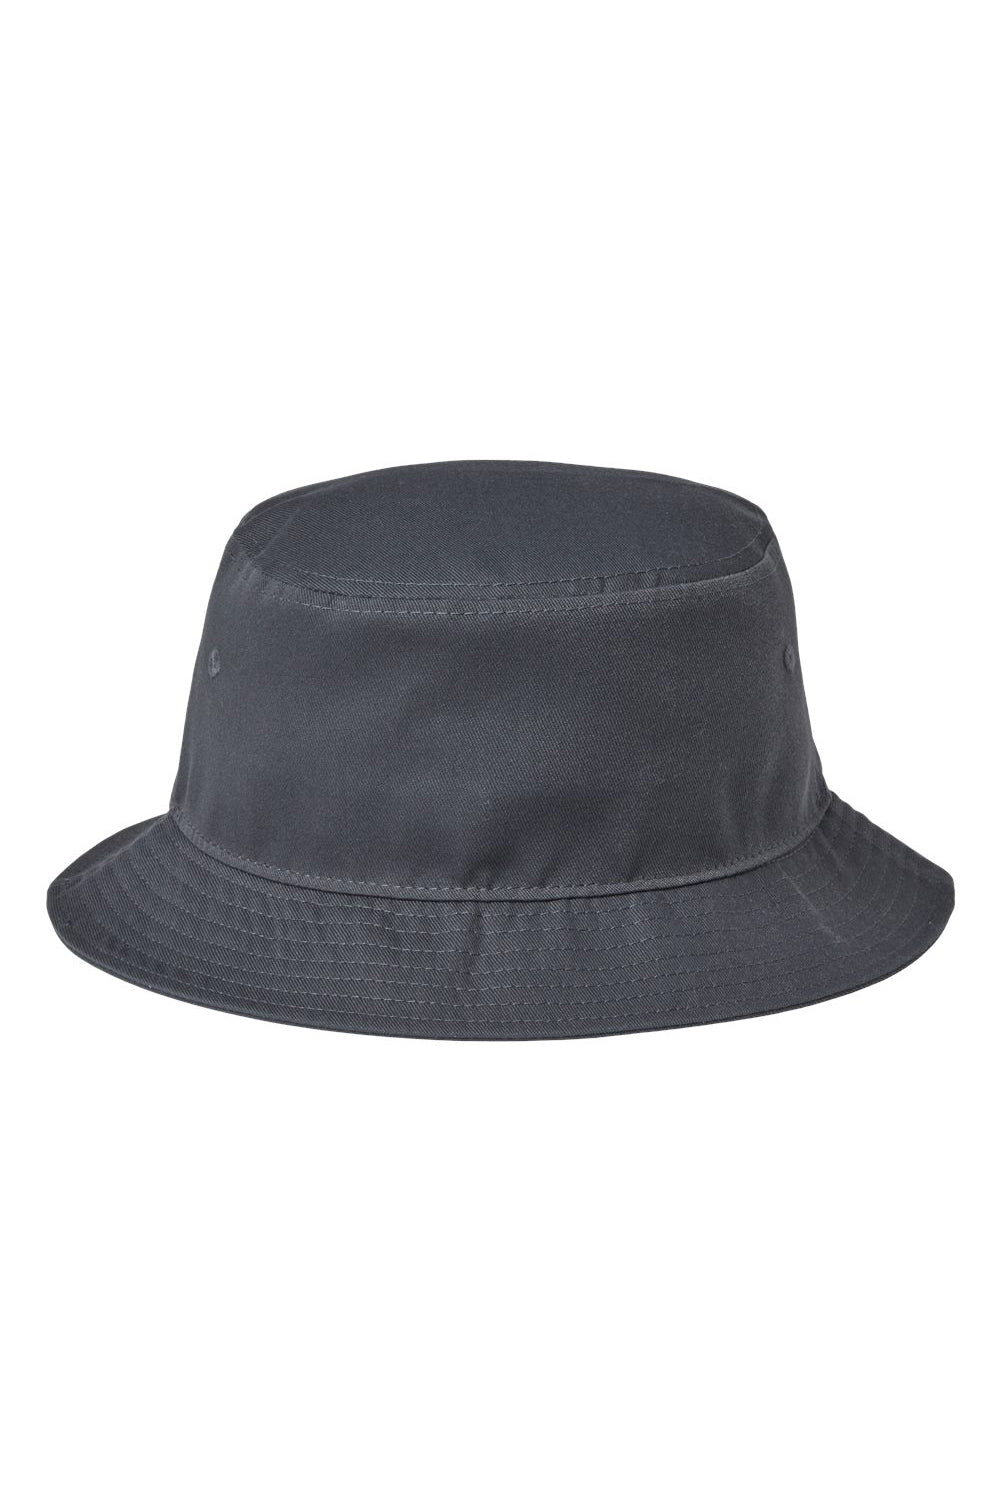 Atlantis Headwear GEO Mens Sustainable Bucket Hat Dark Grey Flat Back